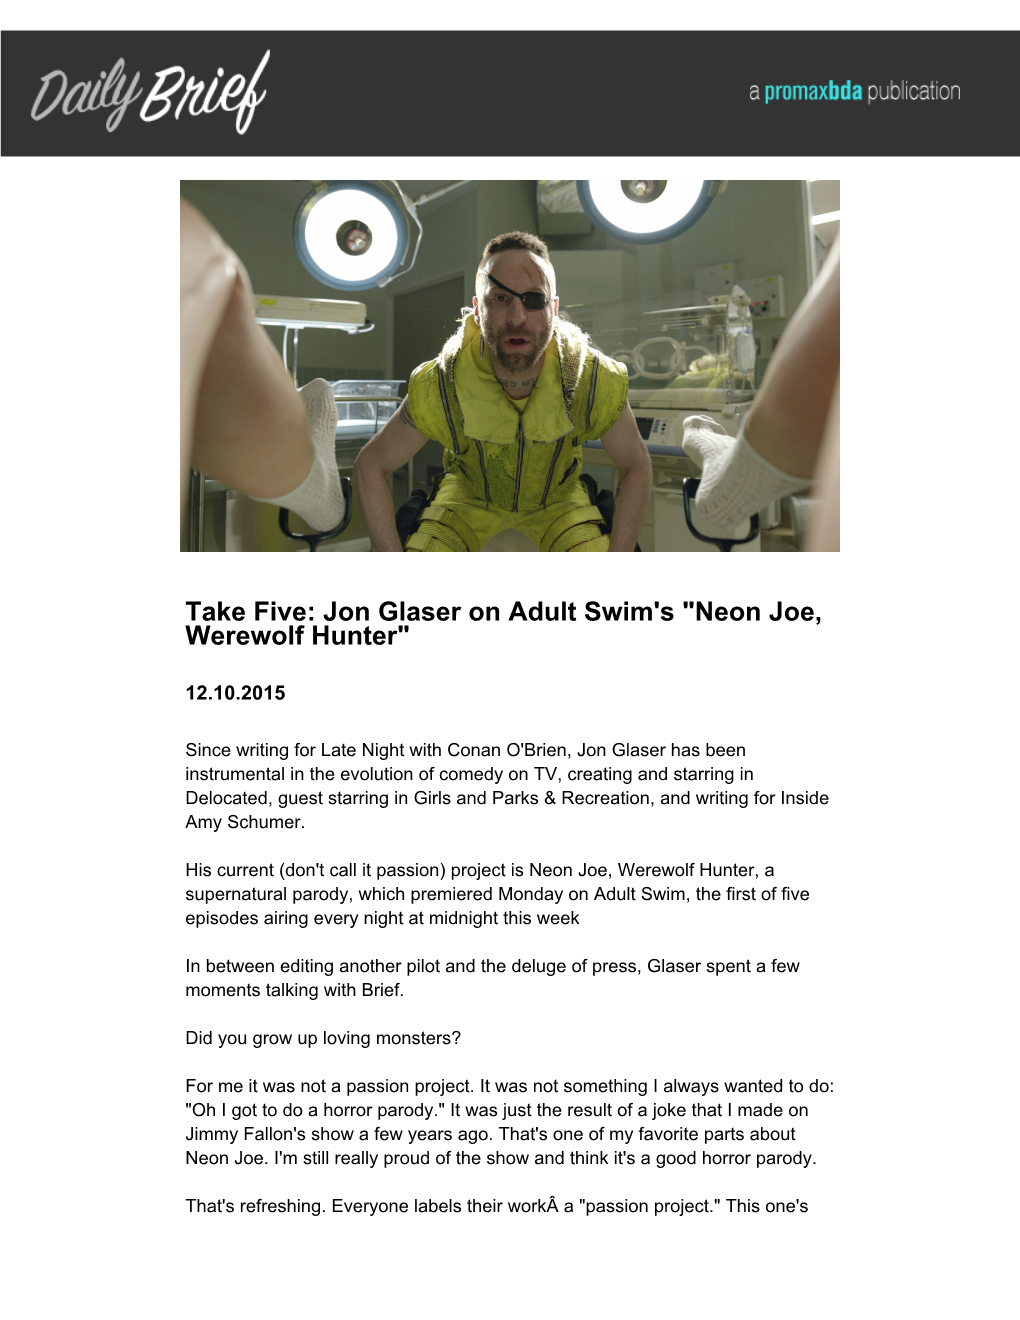 Take Five: Jon Glaser on Adult Swim's "Neon Joe, Werewolf Hunter"